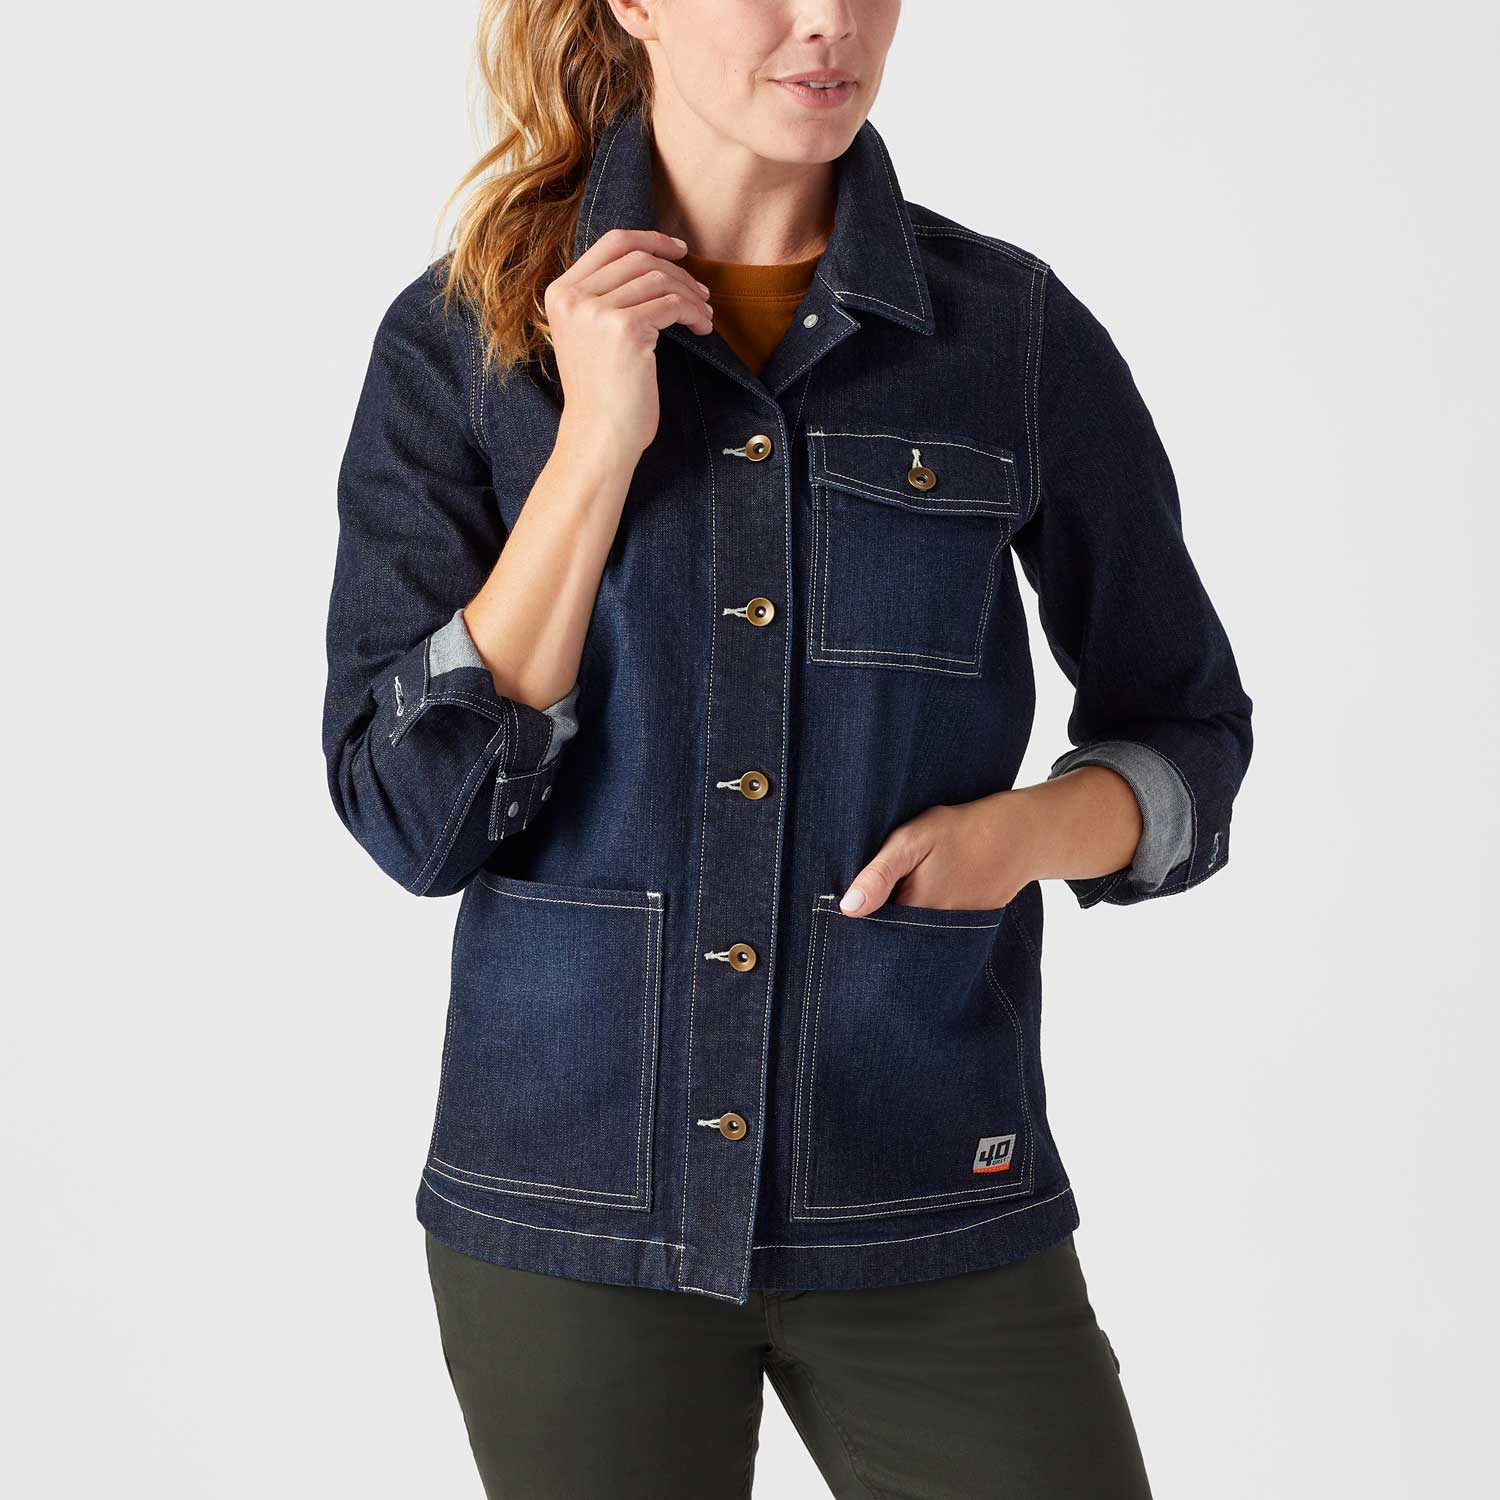 Duluth Trading Company Women's Plus Daily Denim Jacket